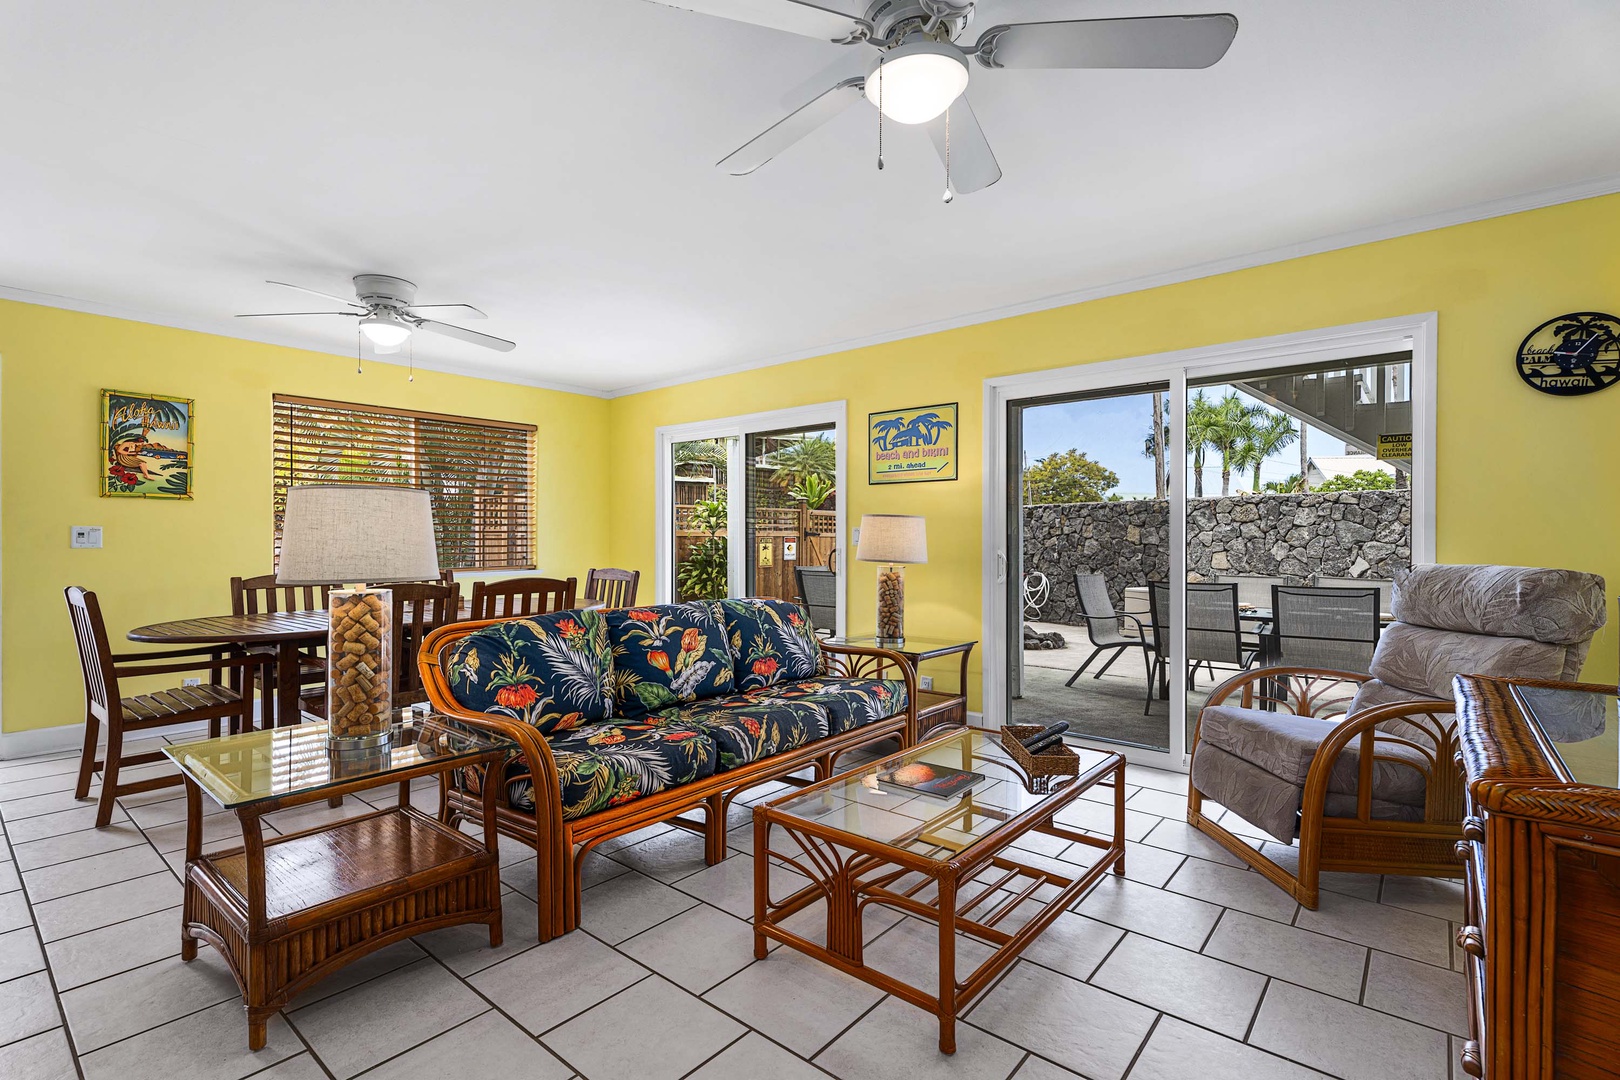 Kailua Kona Vacation Rentals, Hale A Kai - Sliding doors to the inviting outdoors